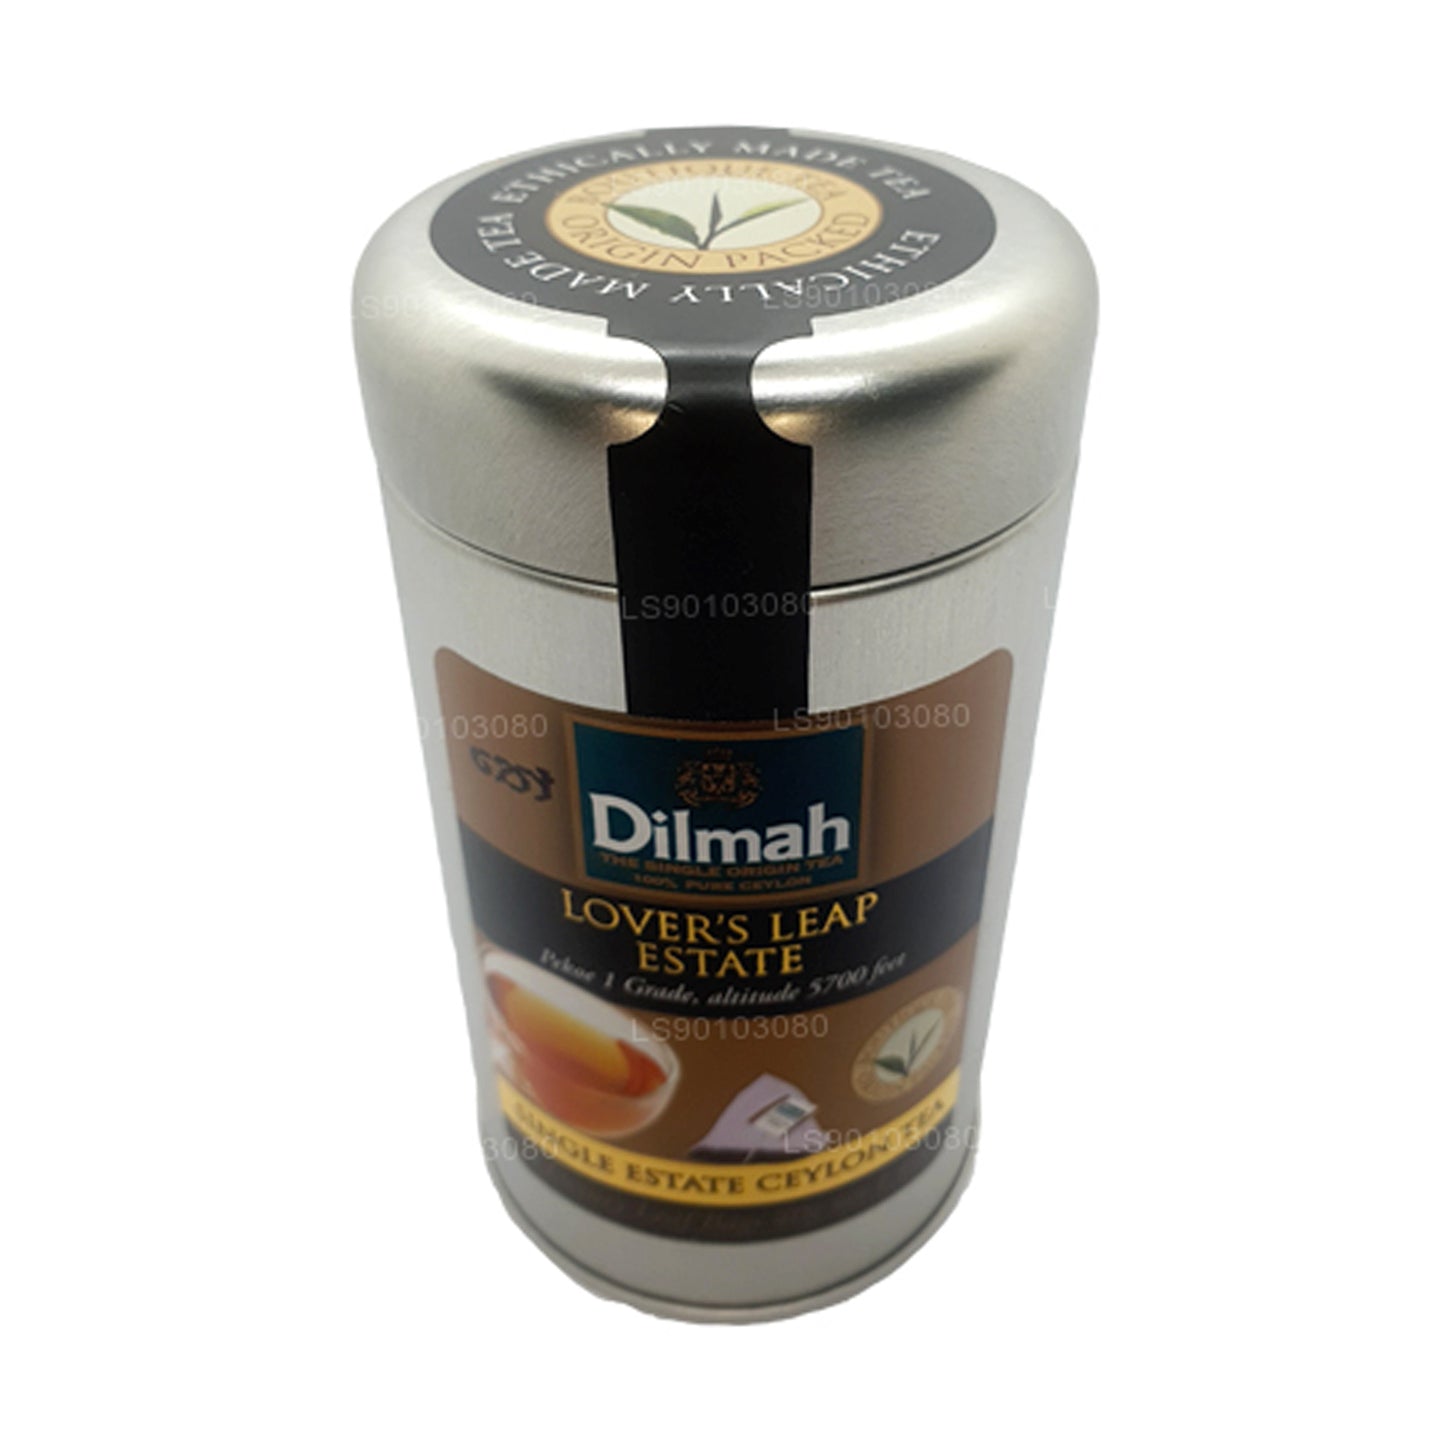 Dilmah Lover's Hüpe Single Estate Tea Caddy (40g)